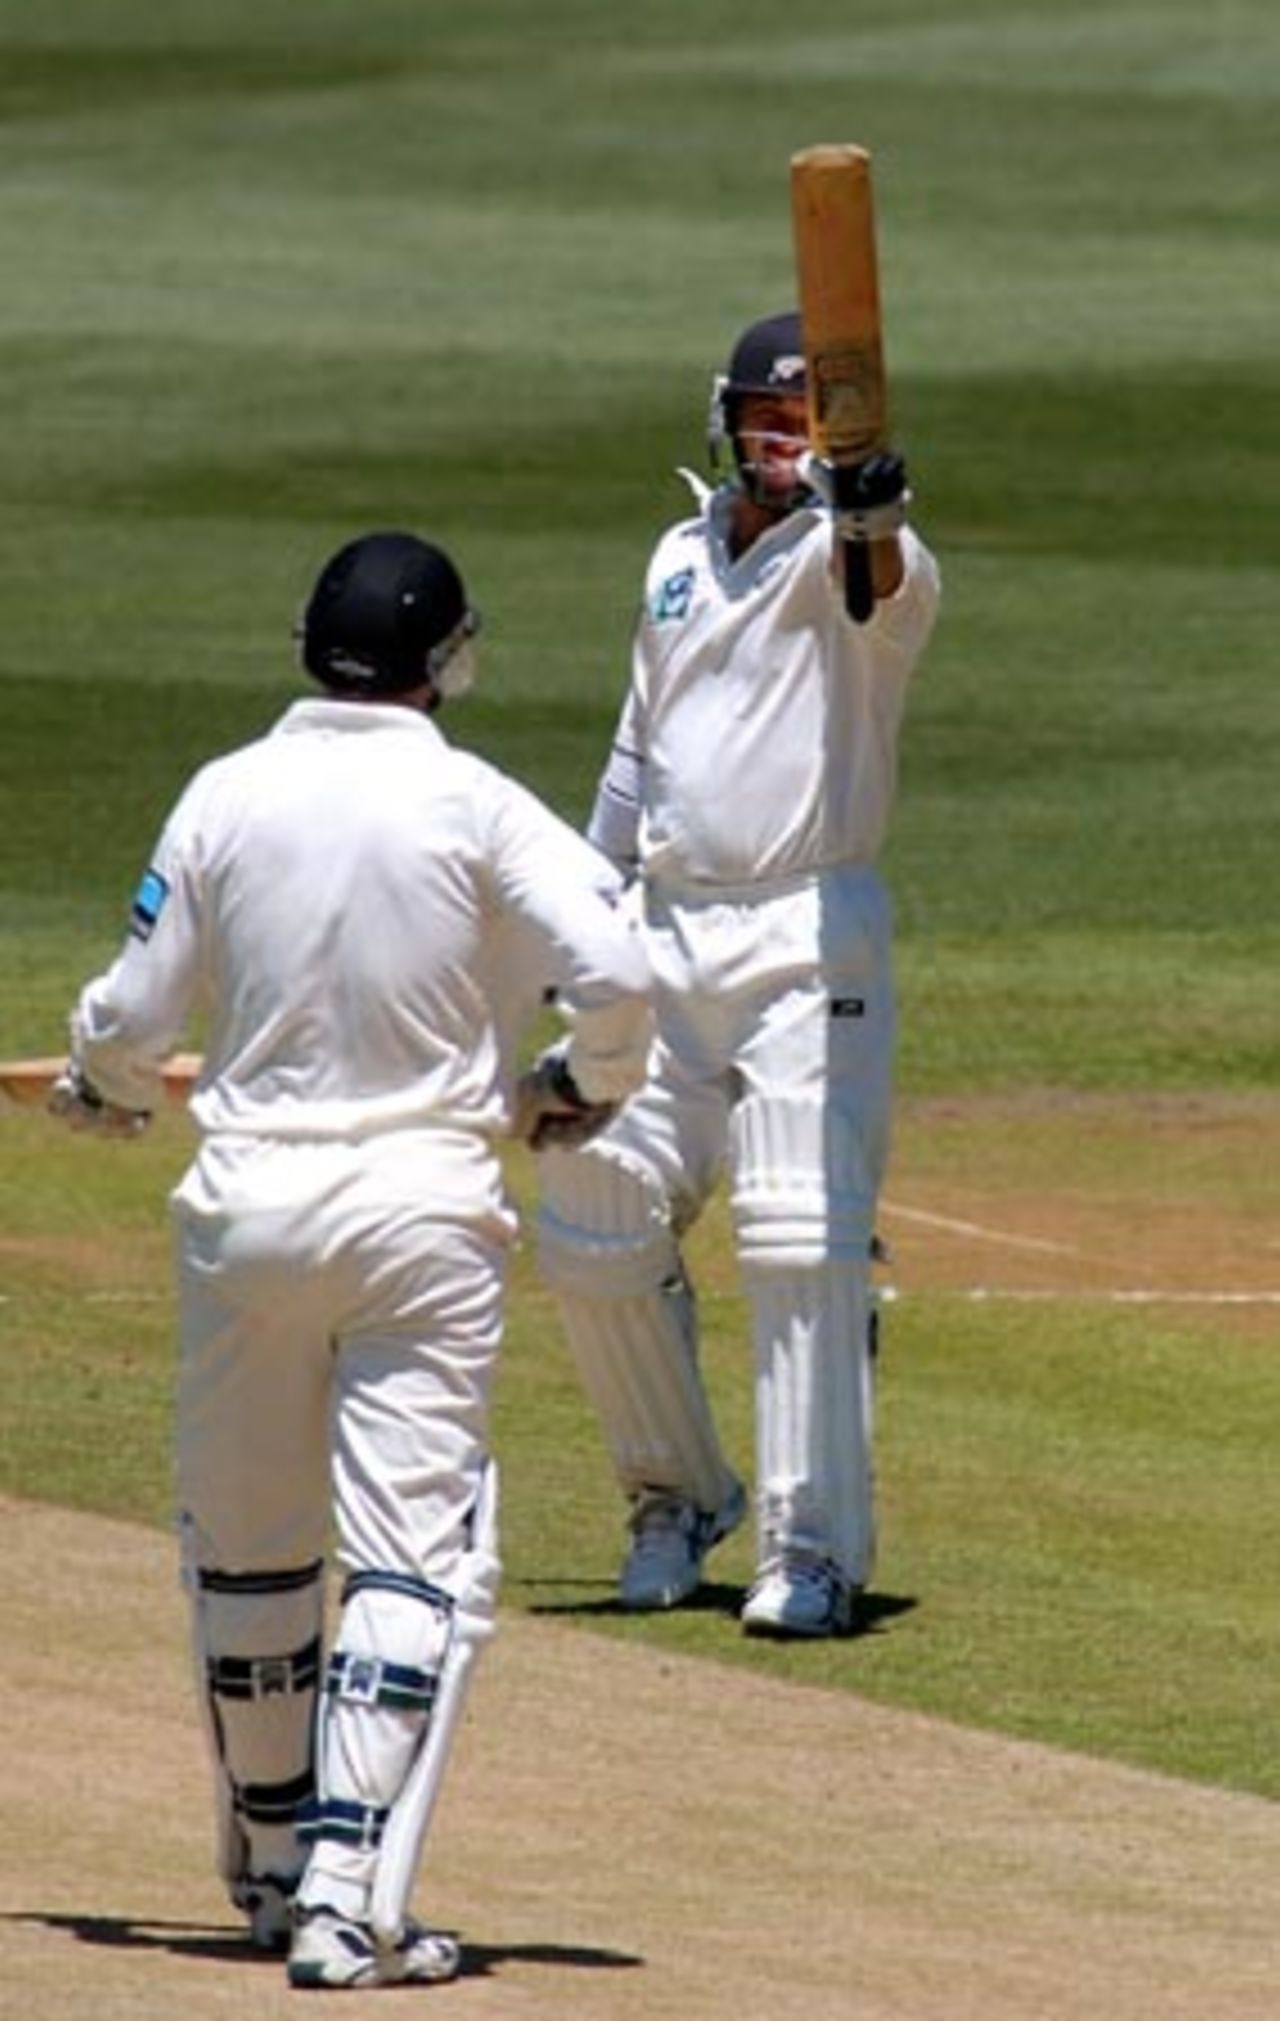 New Zealand batsman Mark Richardson raises his bat upon reaching his 50. Richardson went on to score 83 in his first innings. Batting partner Matt Horne looks on. 2nd Test: New Zealand v Bangladesh at Basin Reserve, Wellington, 26-30 Dec 2001 (29 December 2001).